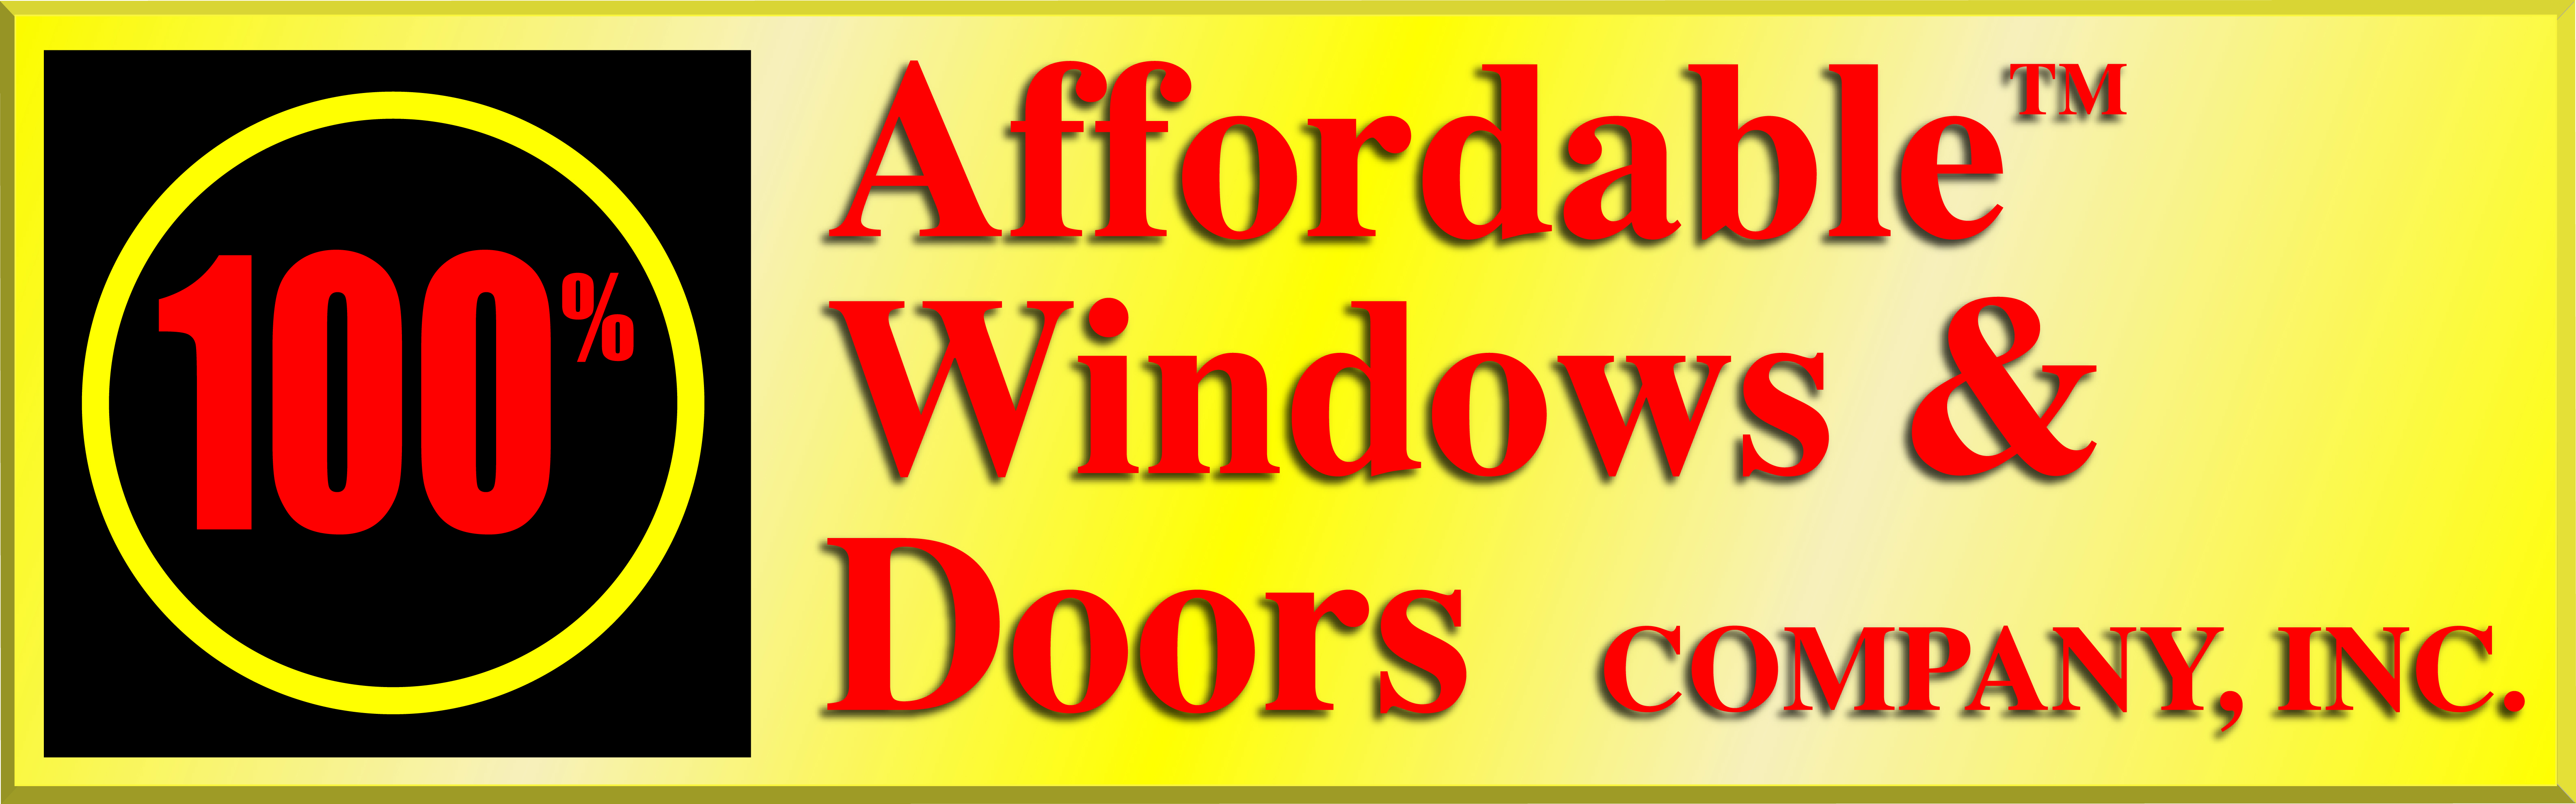 Affordable Windows & Doors Co., Inc. logo